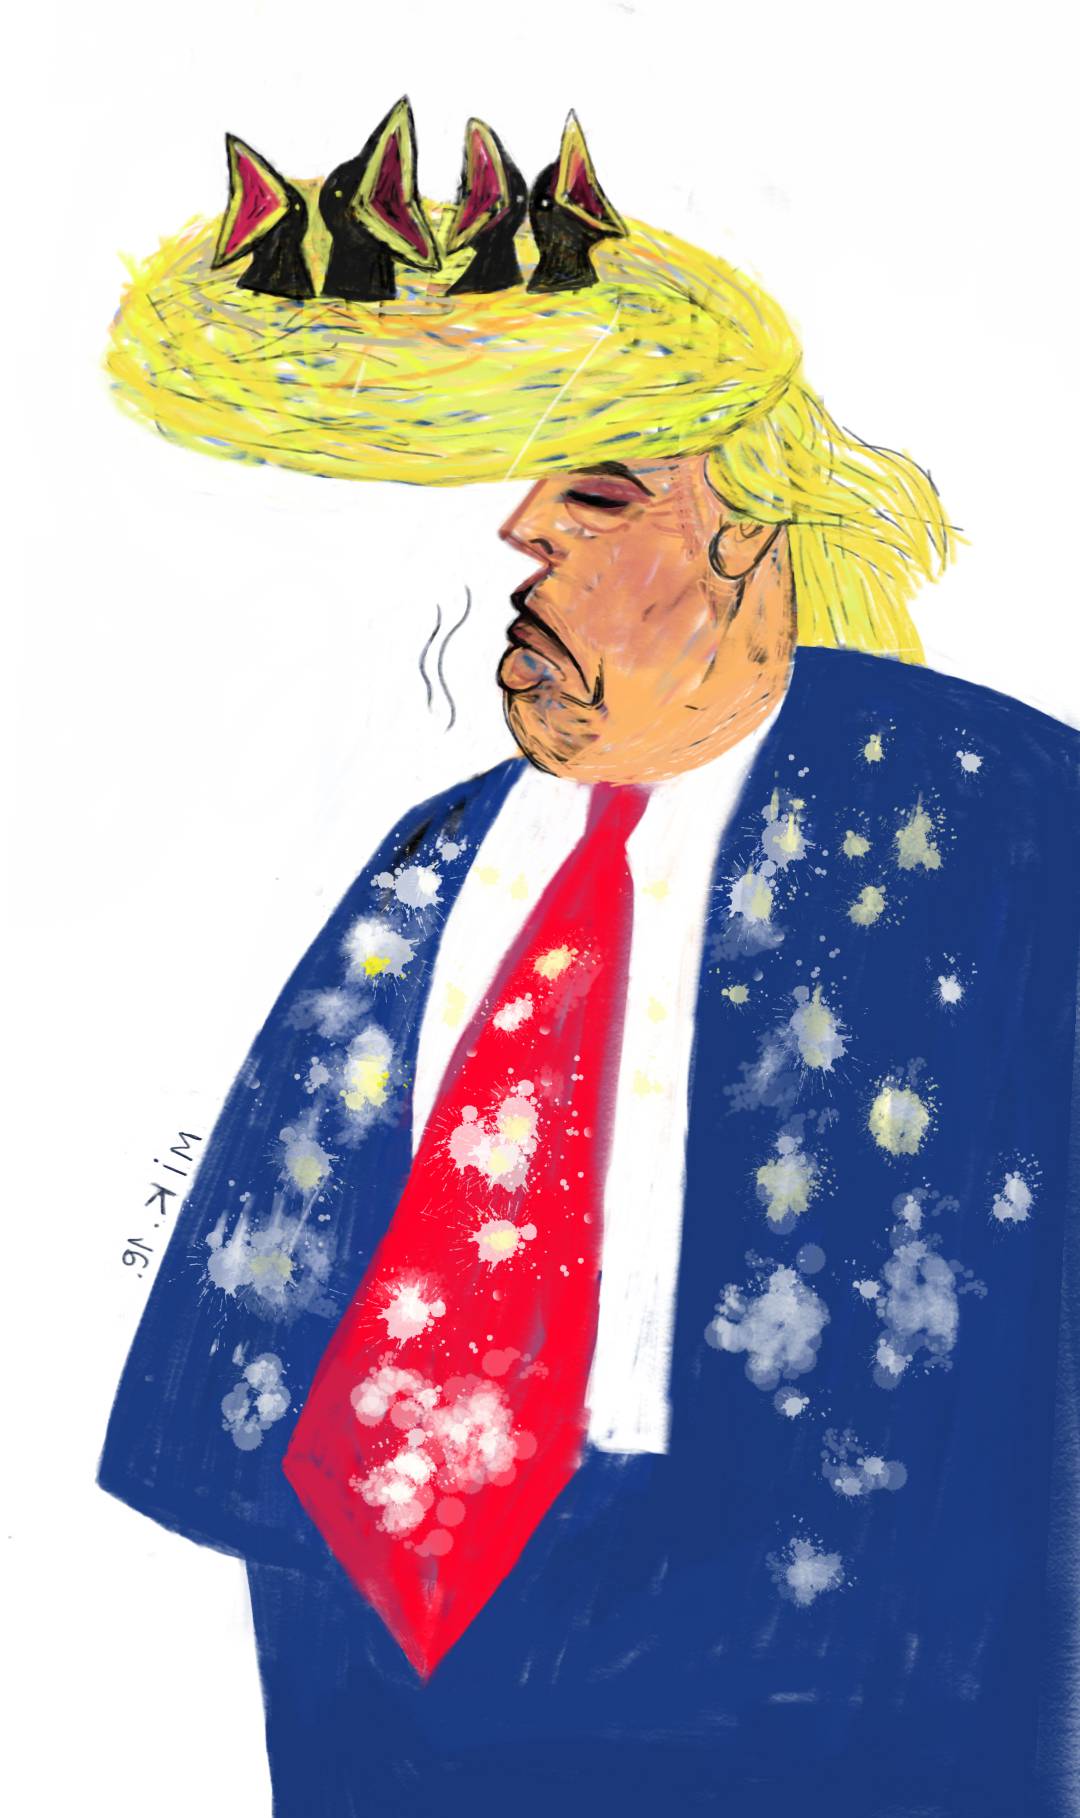 Splićanin oduševio Trumpovim karikaturama: 'Genijalan si...'